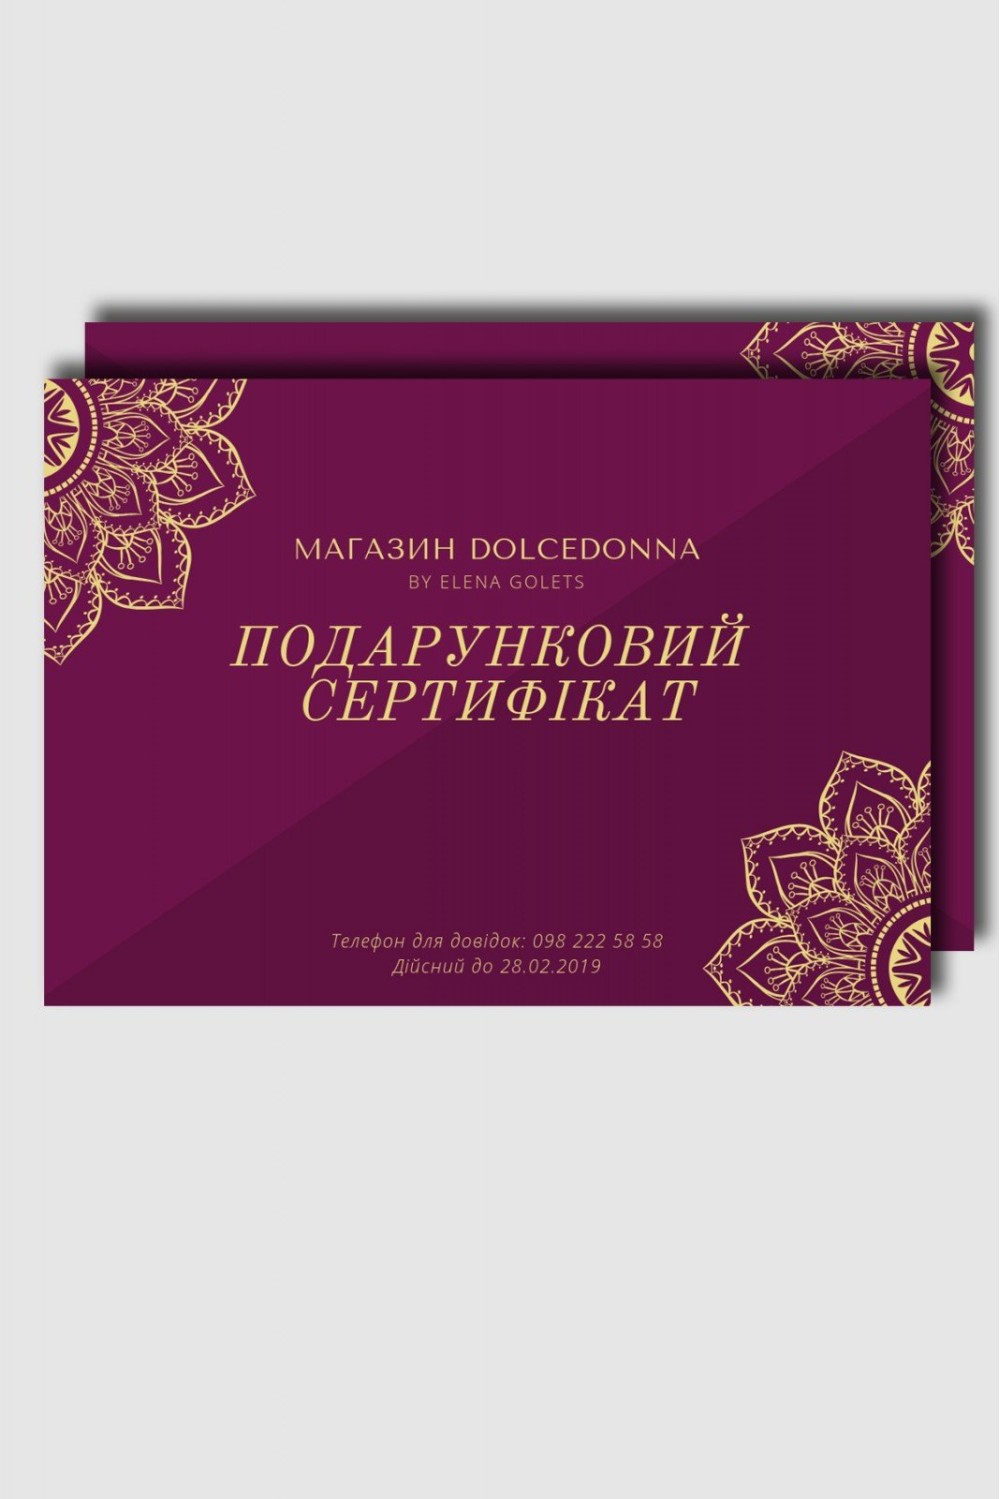 1500 UAH certificate - photo 5